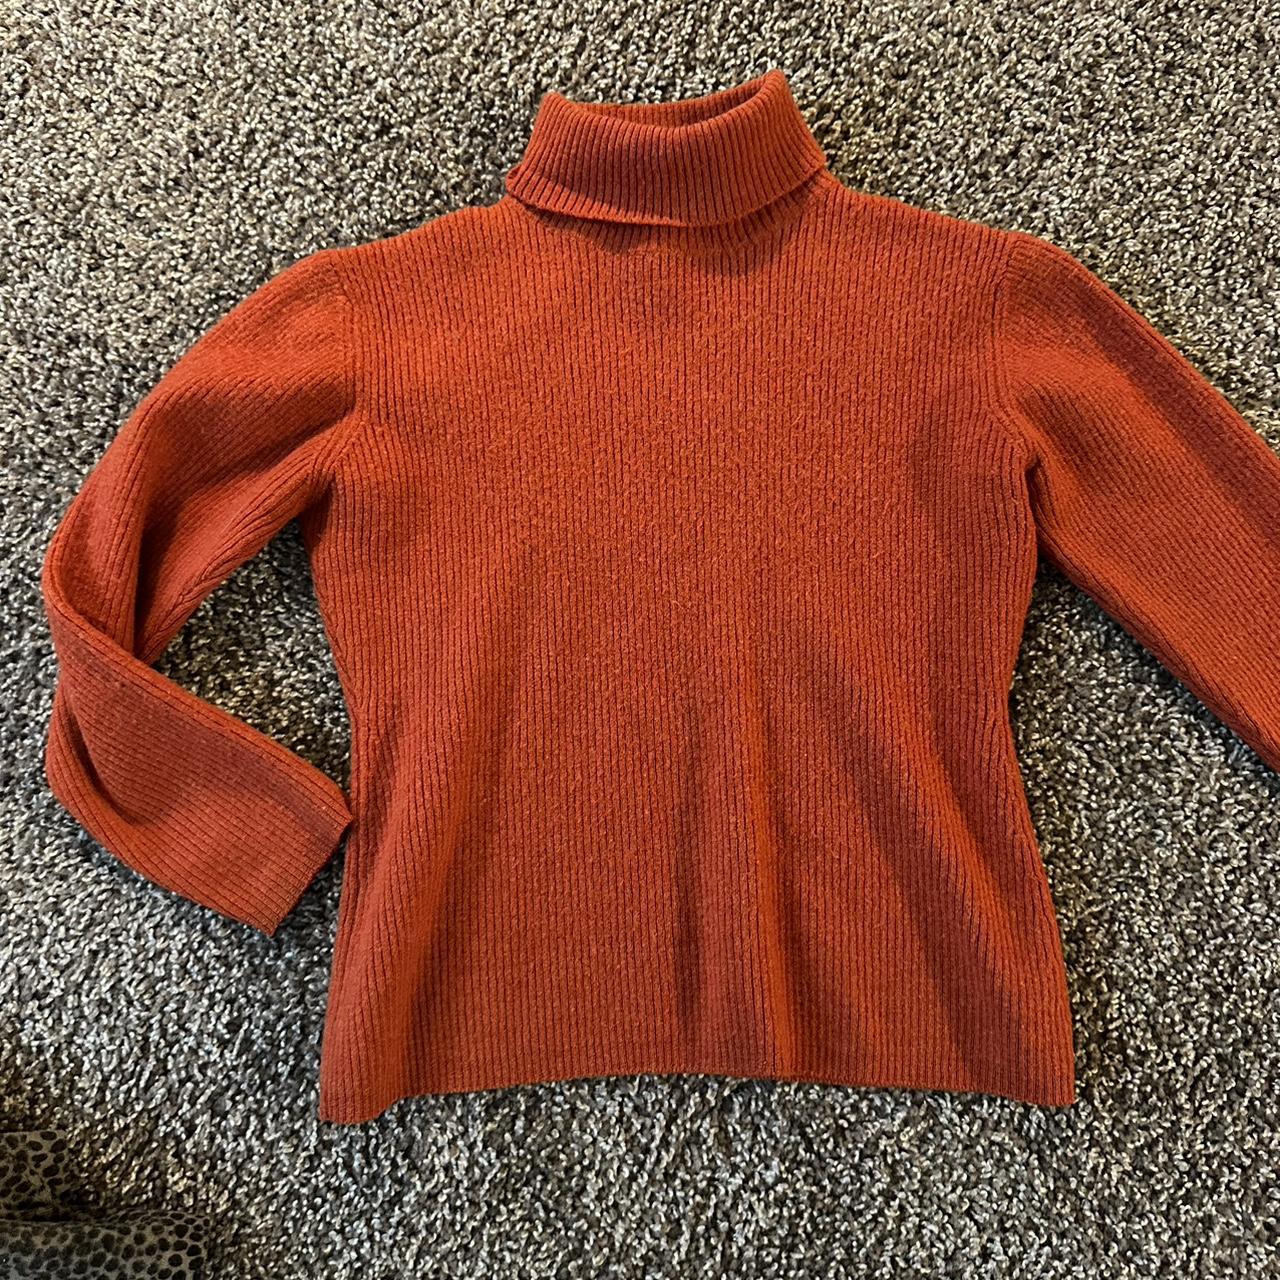 bright burnt orange turtleneck sweater tagged size... - Depop